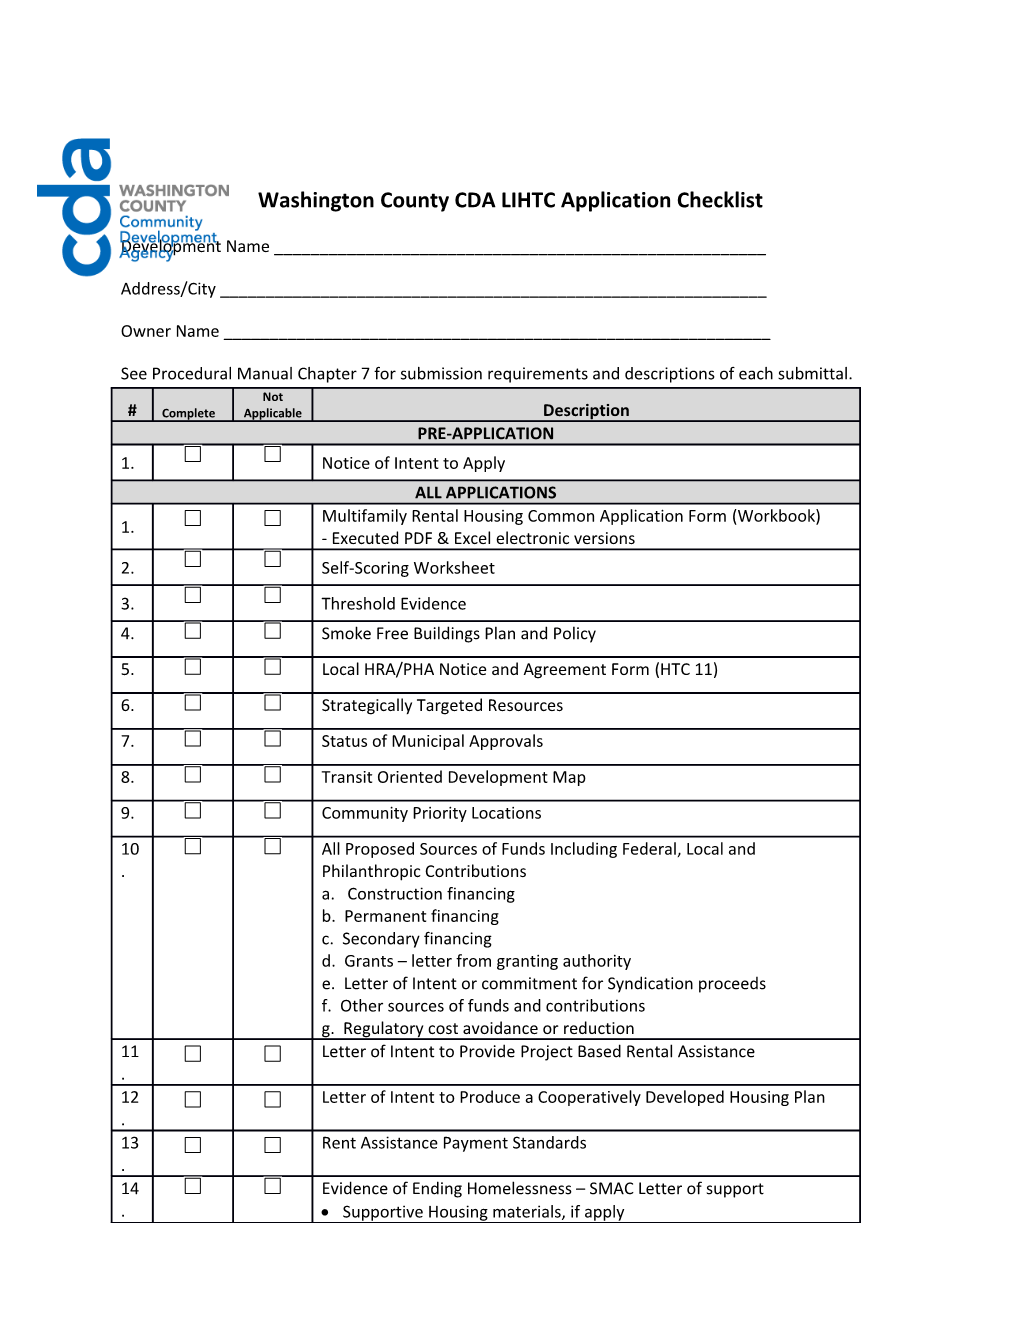 Washington County CDALIHTC Application Checklist